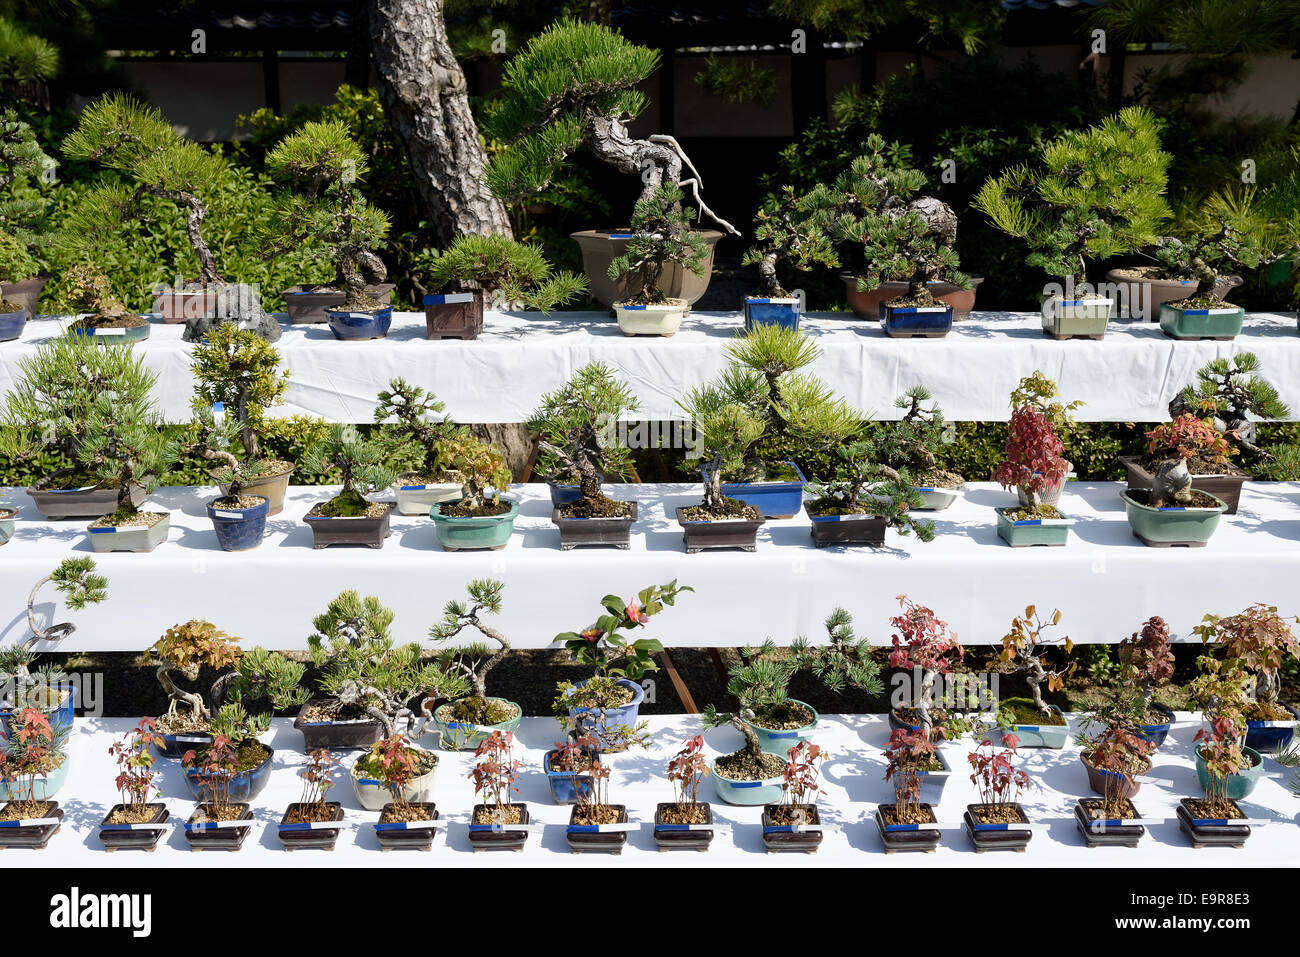 Row of bonsai trees at a Japanese garden Stock Photo